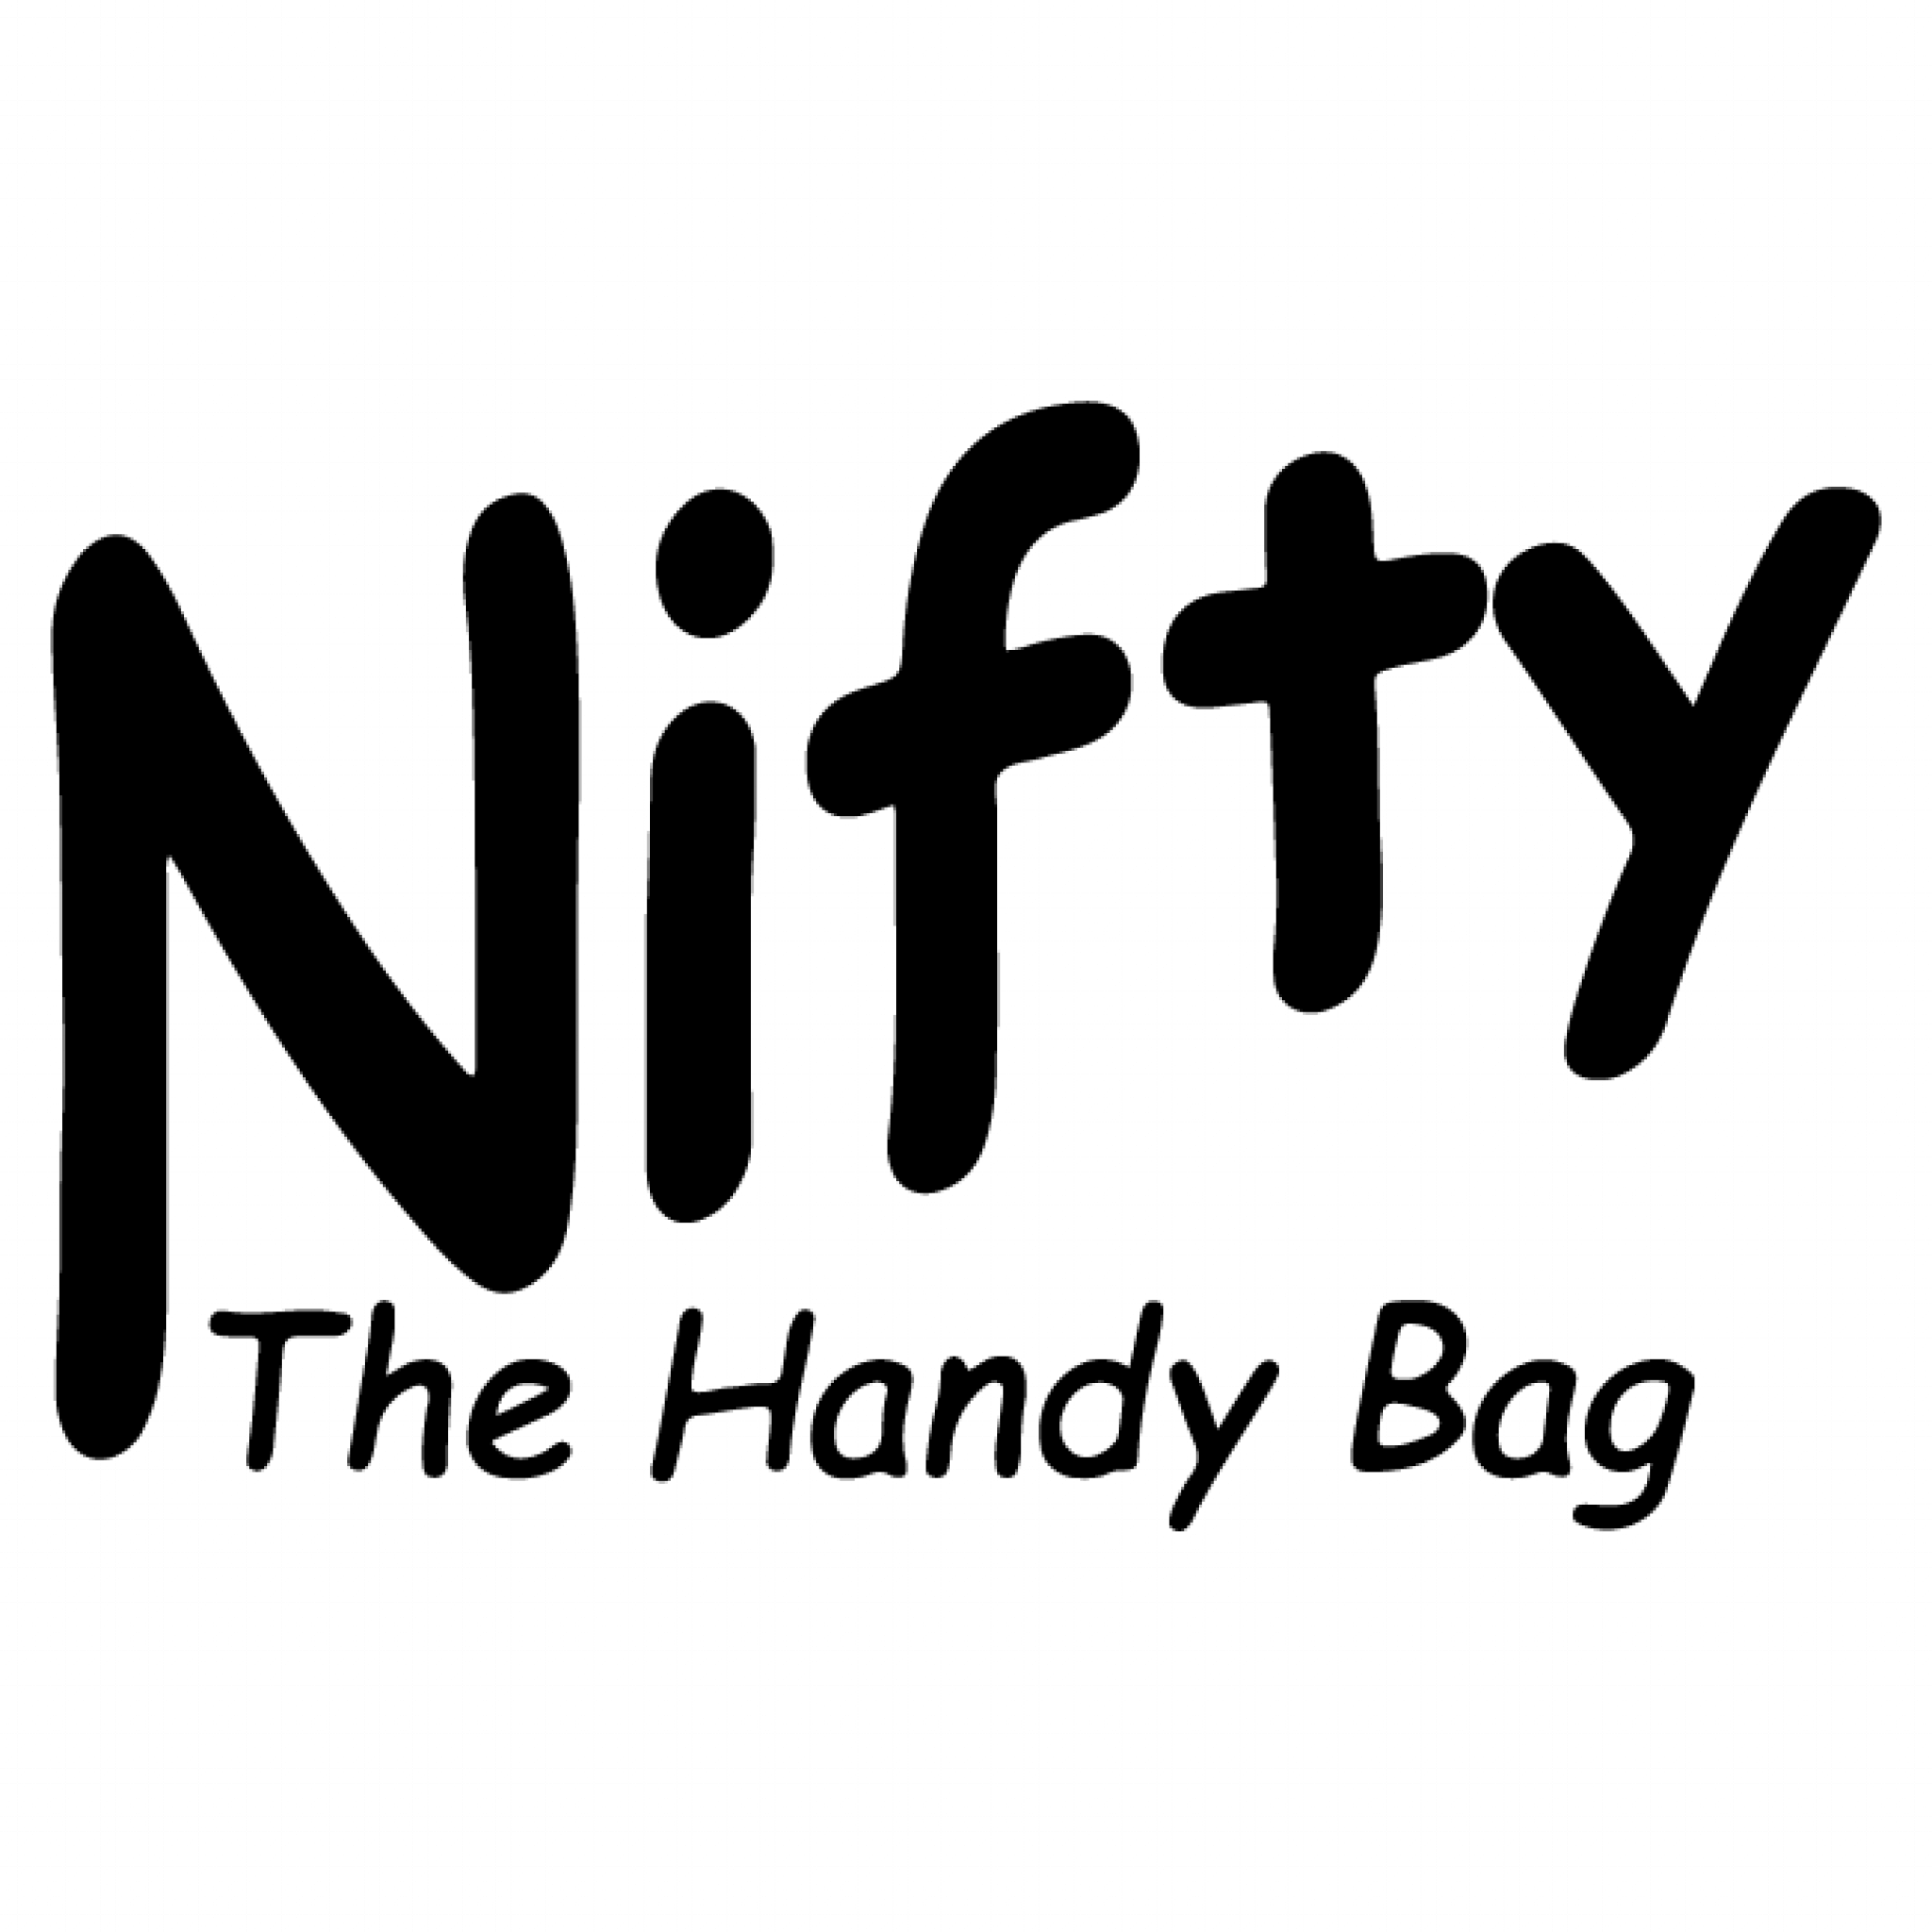 Nifty the handy bag logo